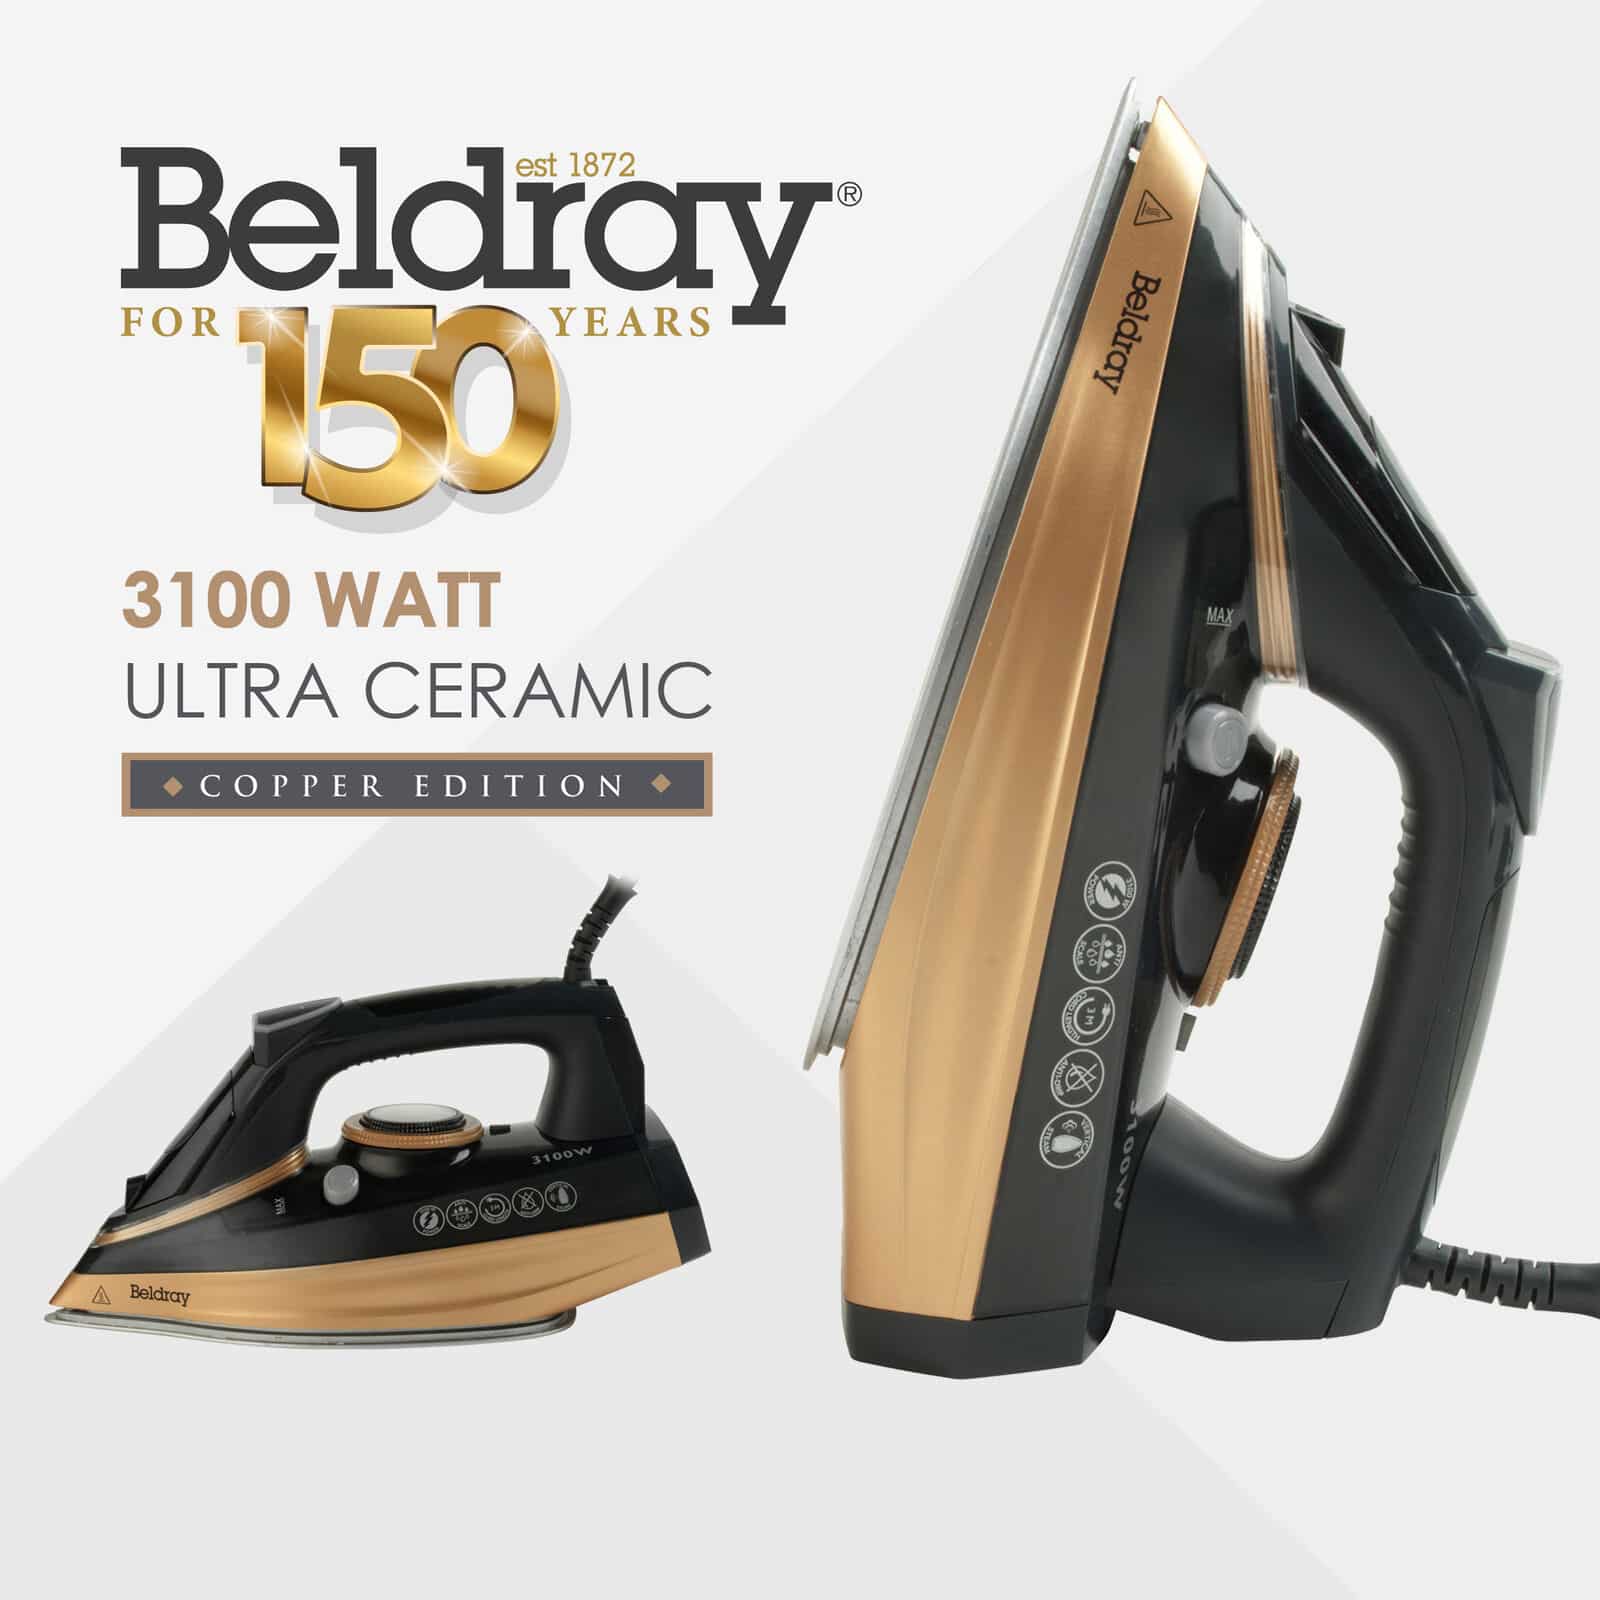 Beldray Copper Edition Ceramic Steam Iron (BEL0820NC-150) - 7937